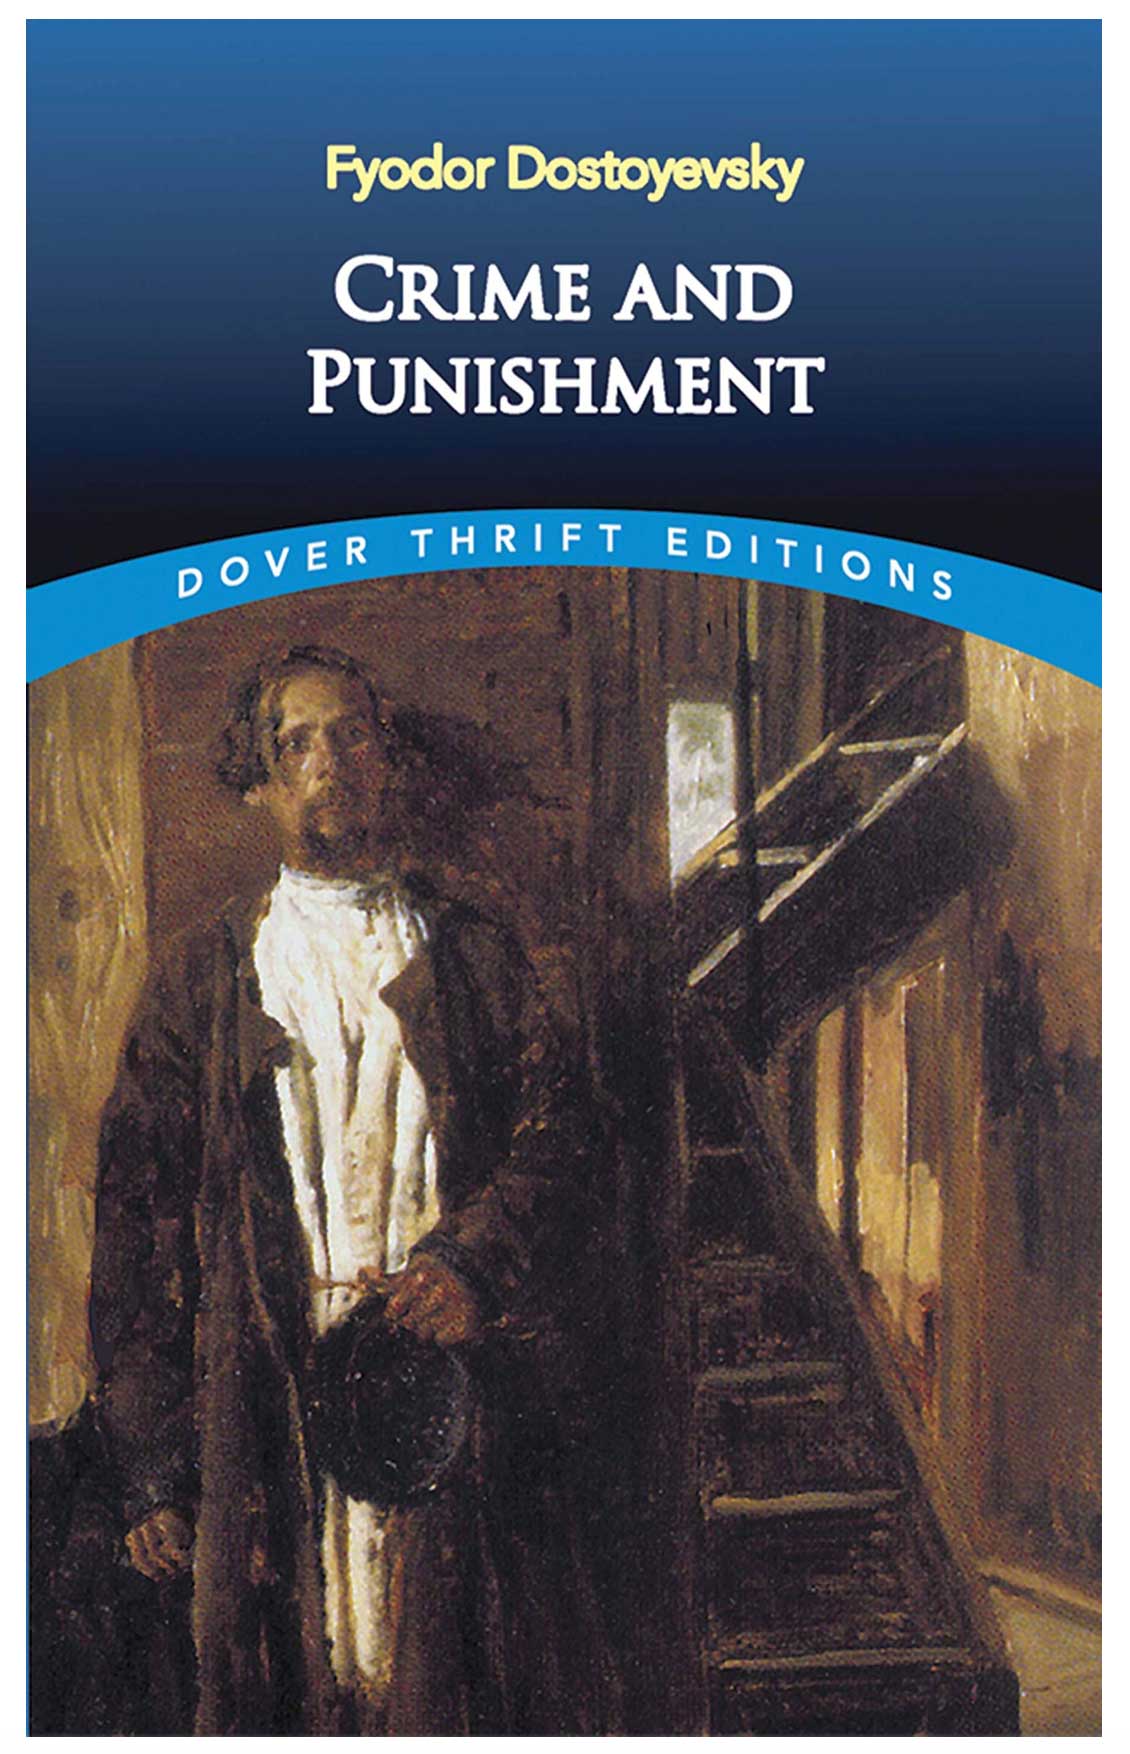 Fyodor Dostoyevsky - Crime and Punishment--Book Cover